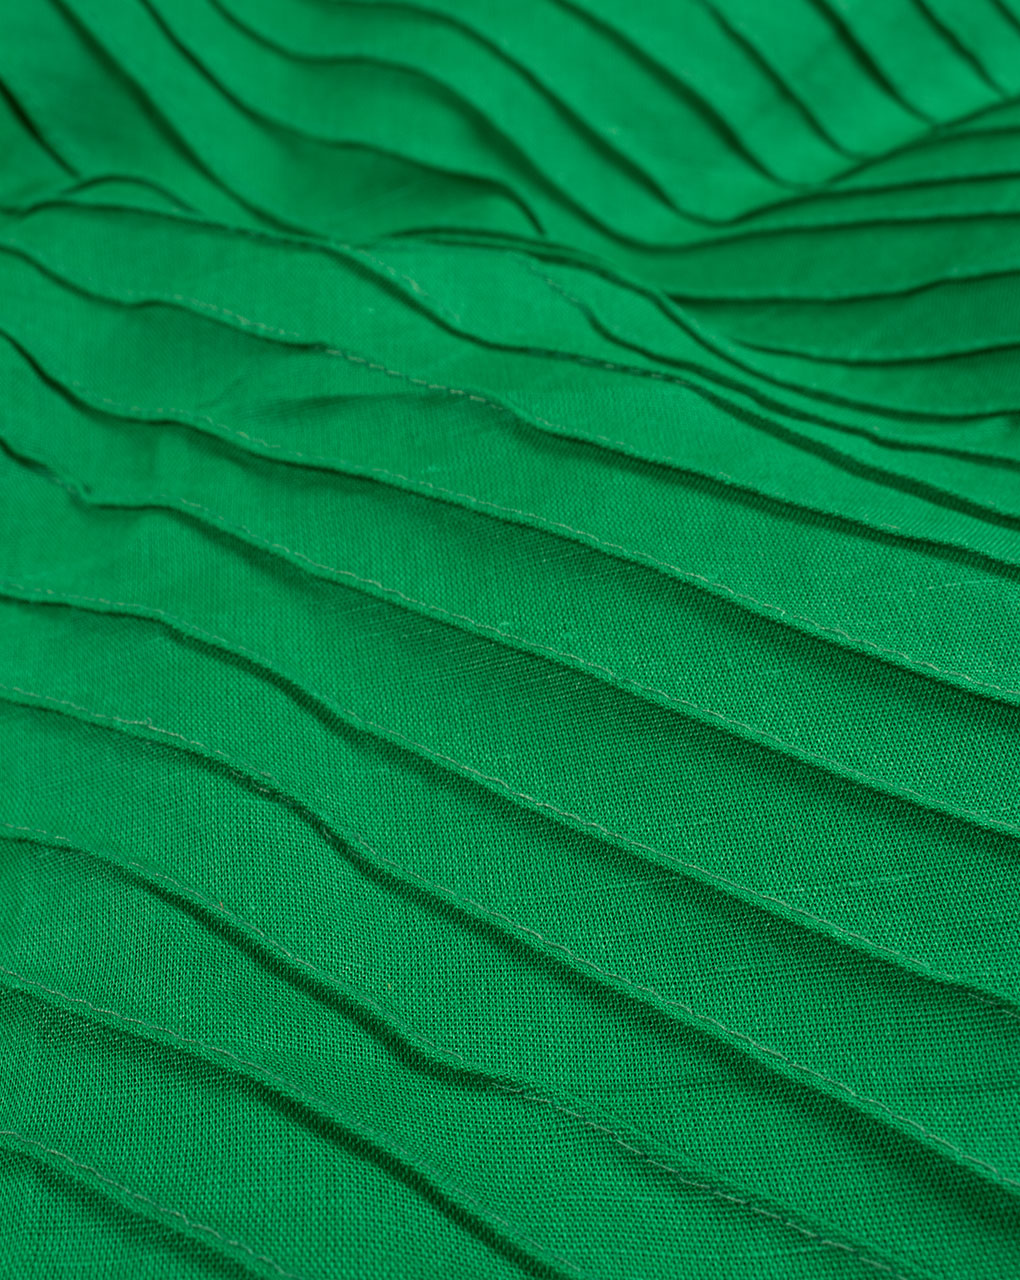 Green Pin-Tucks Flex Cotton Fabric - Fabriclore.com